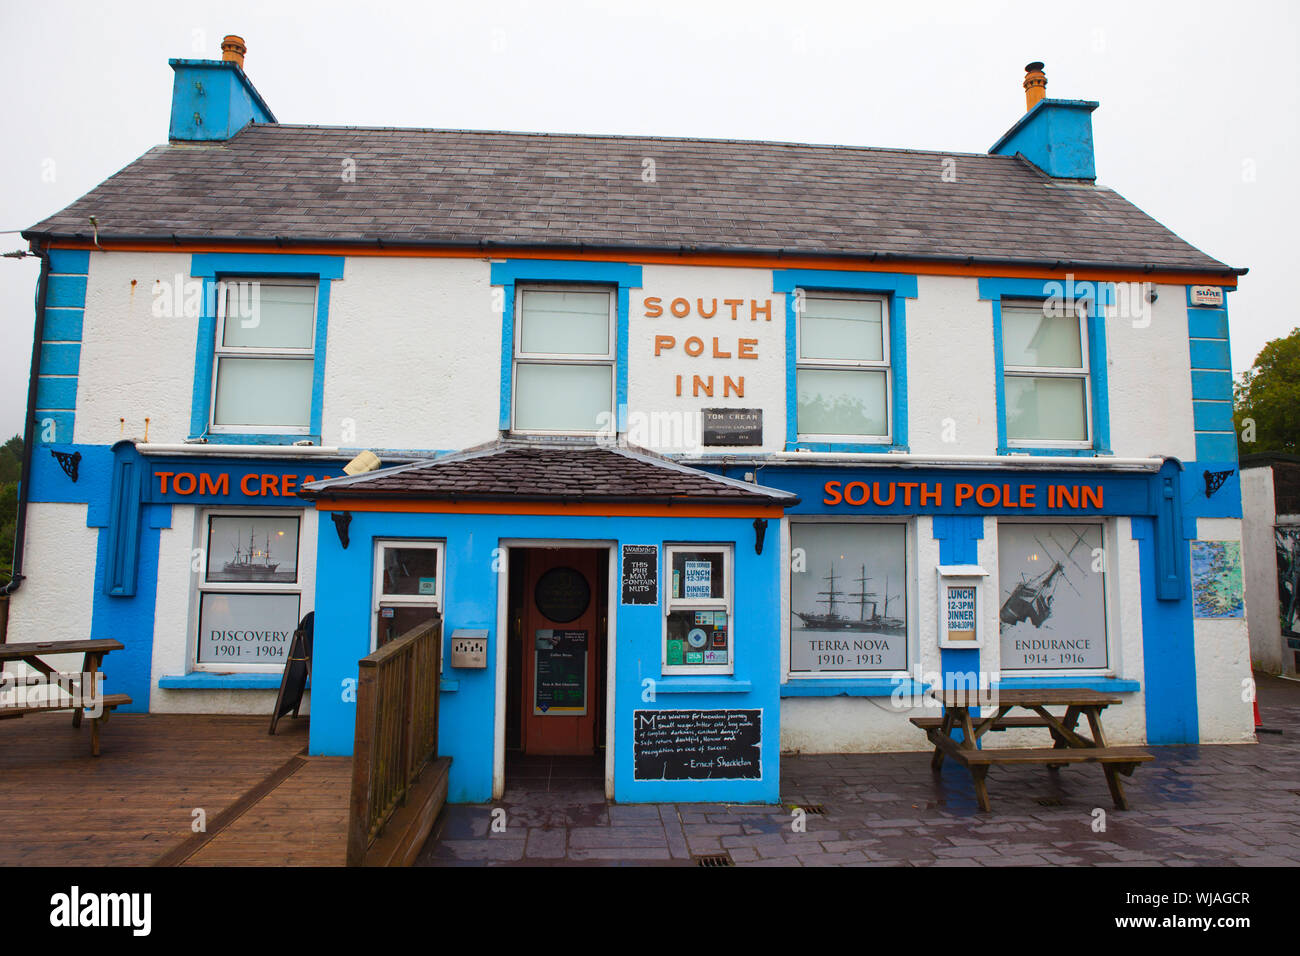 The South Pole Inn, pub owned by polar explorer Tom Crean, Annascaul, Dingle Peninsula, Co. Kerry, Ireland. Stock Photo